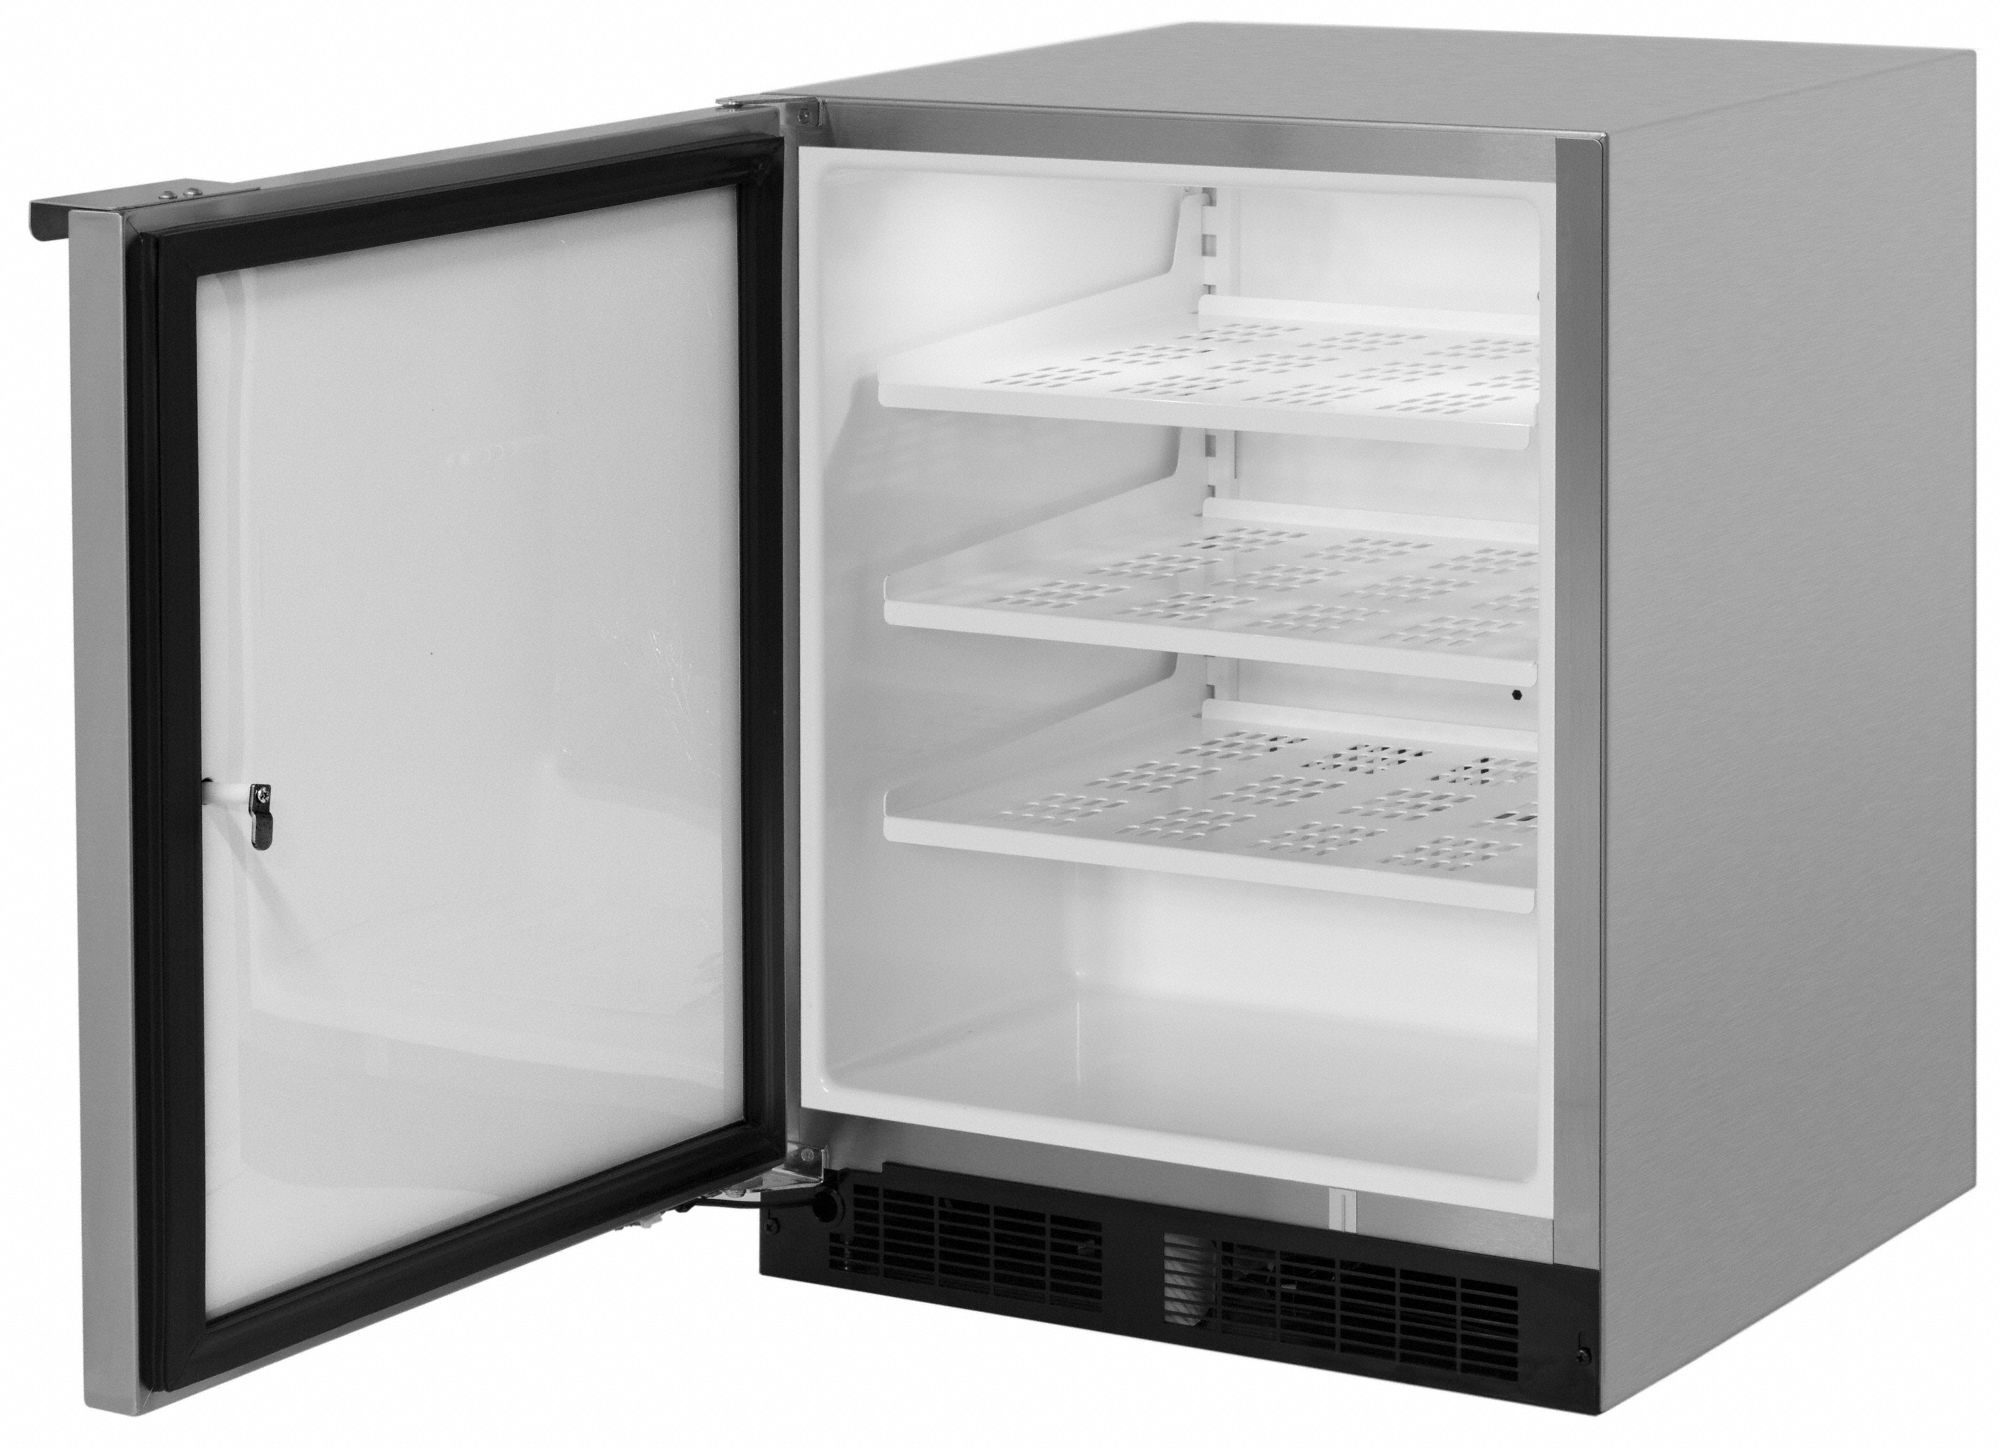 Refrigerator,4.6 cu. ft.,SS,Left